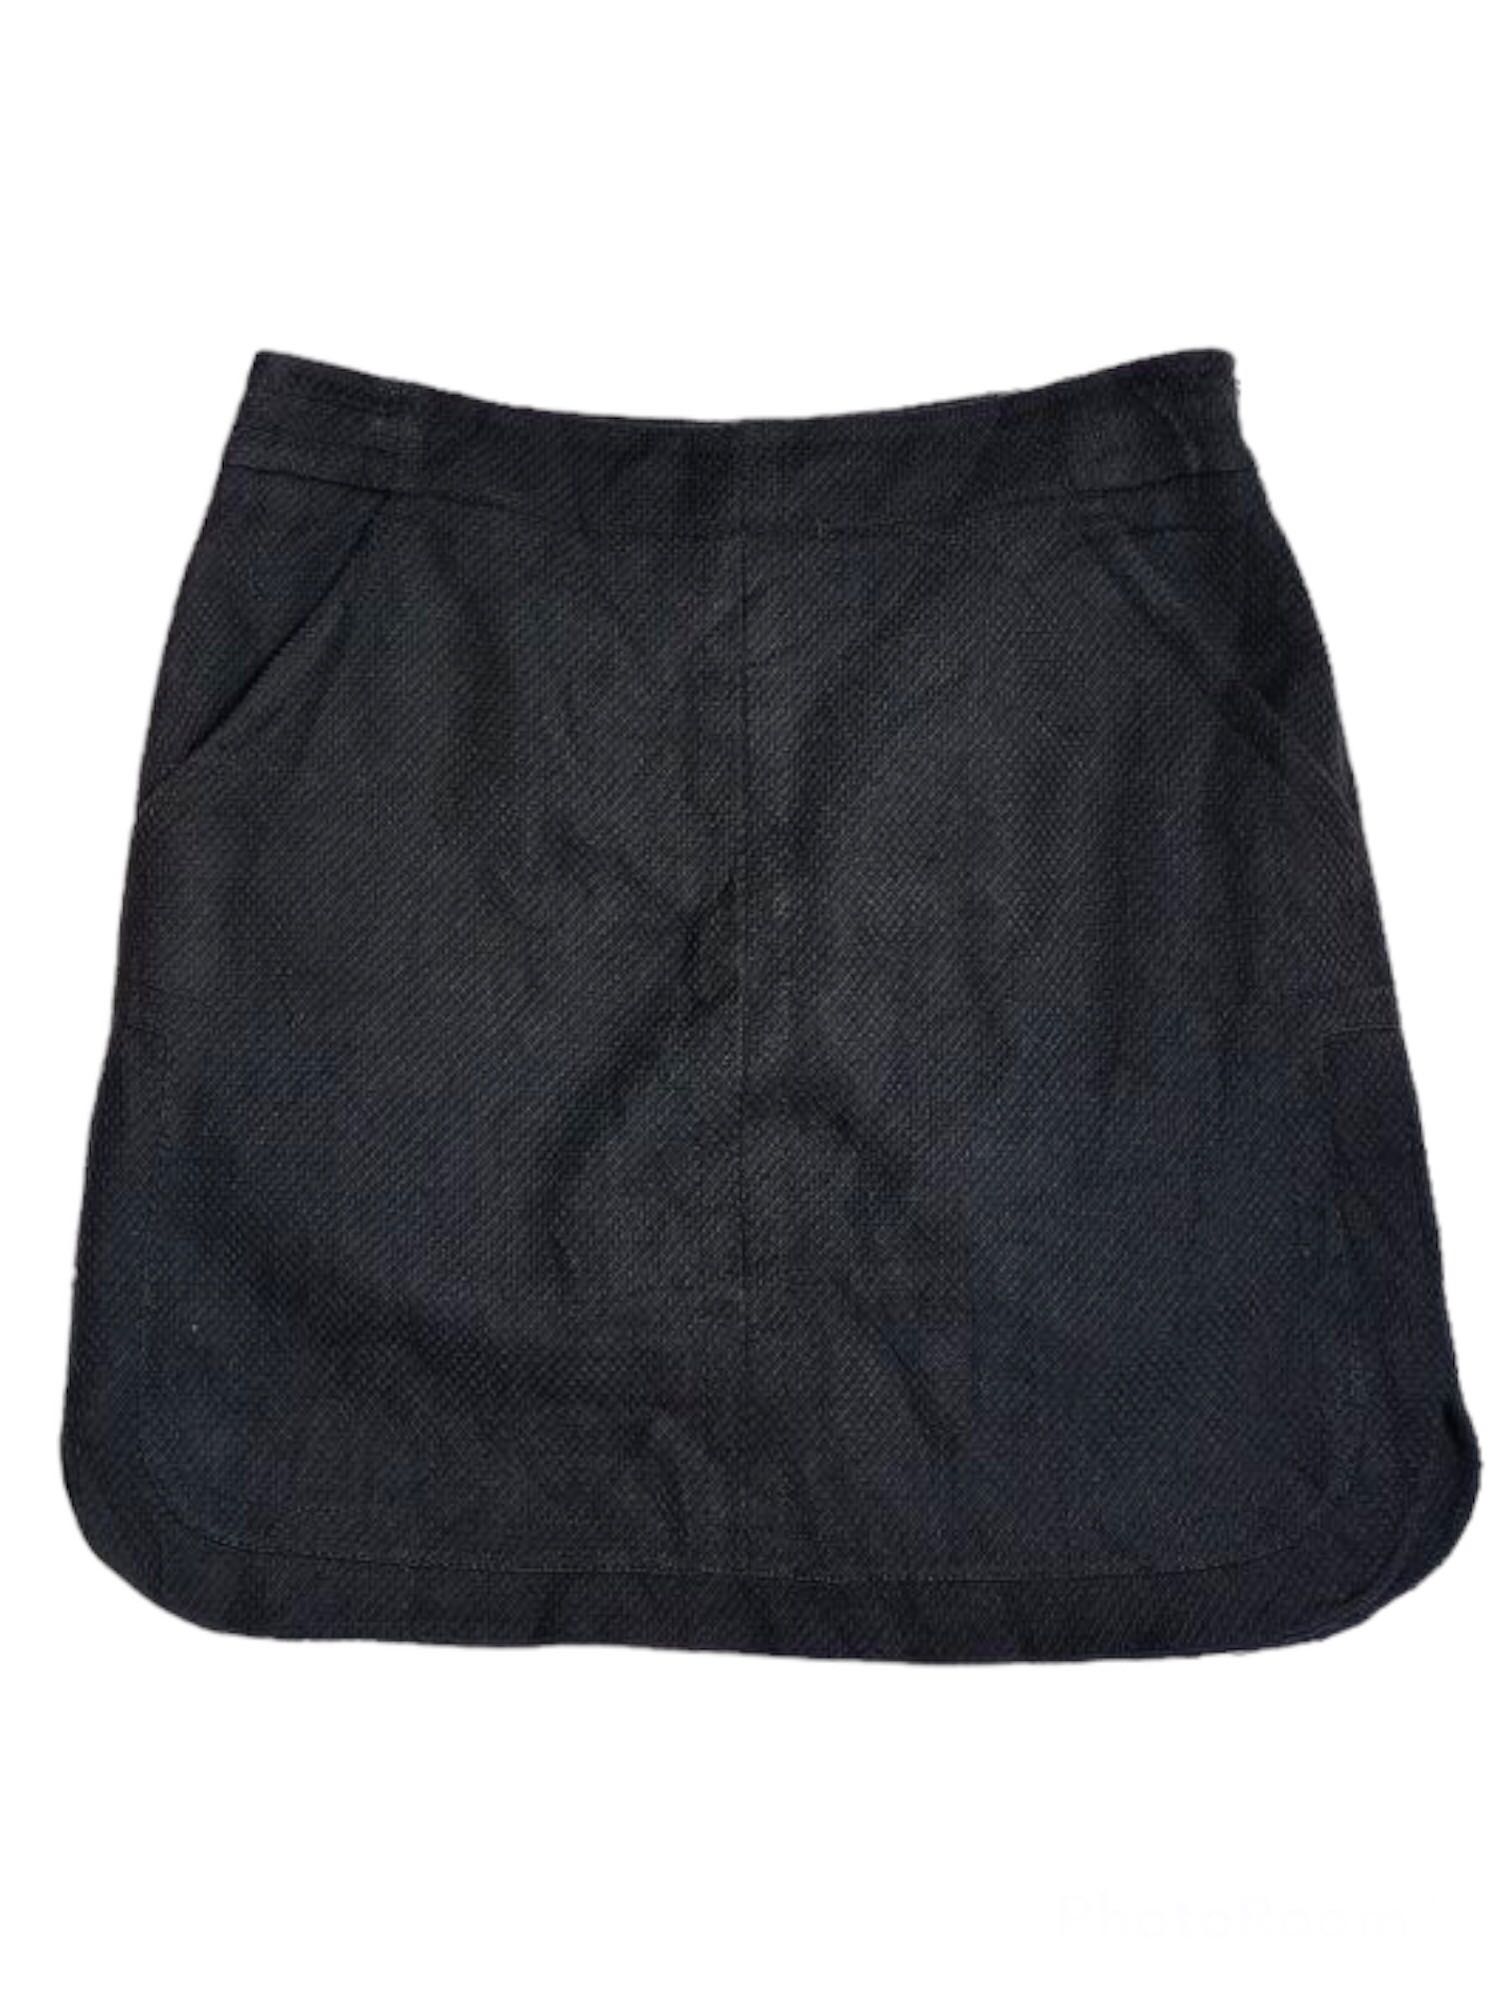 Kenzo Cotton Mini Skirt Made in Slovakia Size 38 - 1